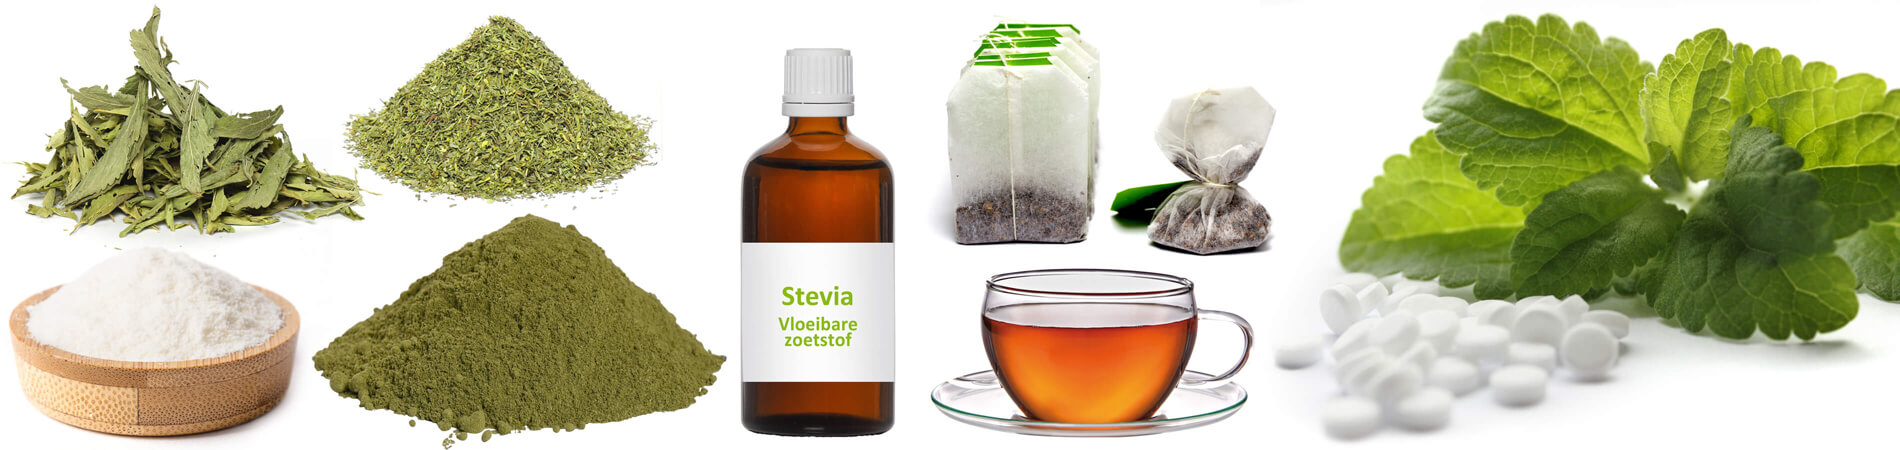 Hoe doseer je Stevia correct | Stevia Gids voor de juiste...